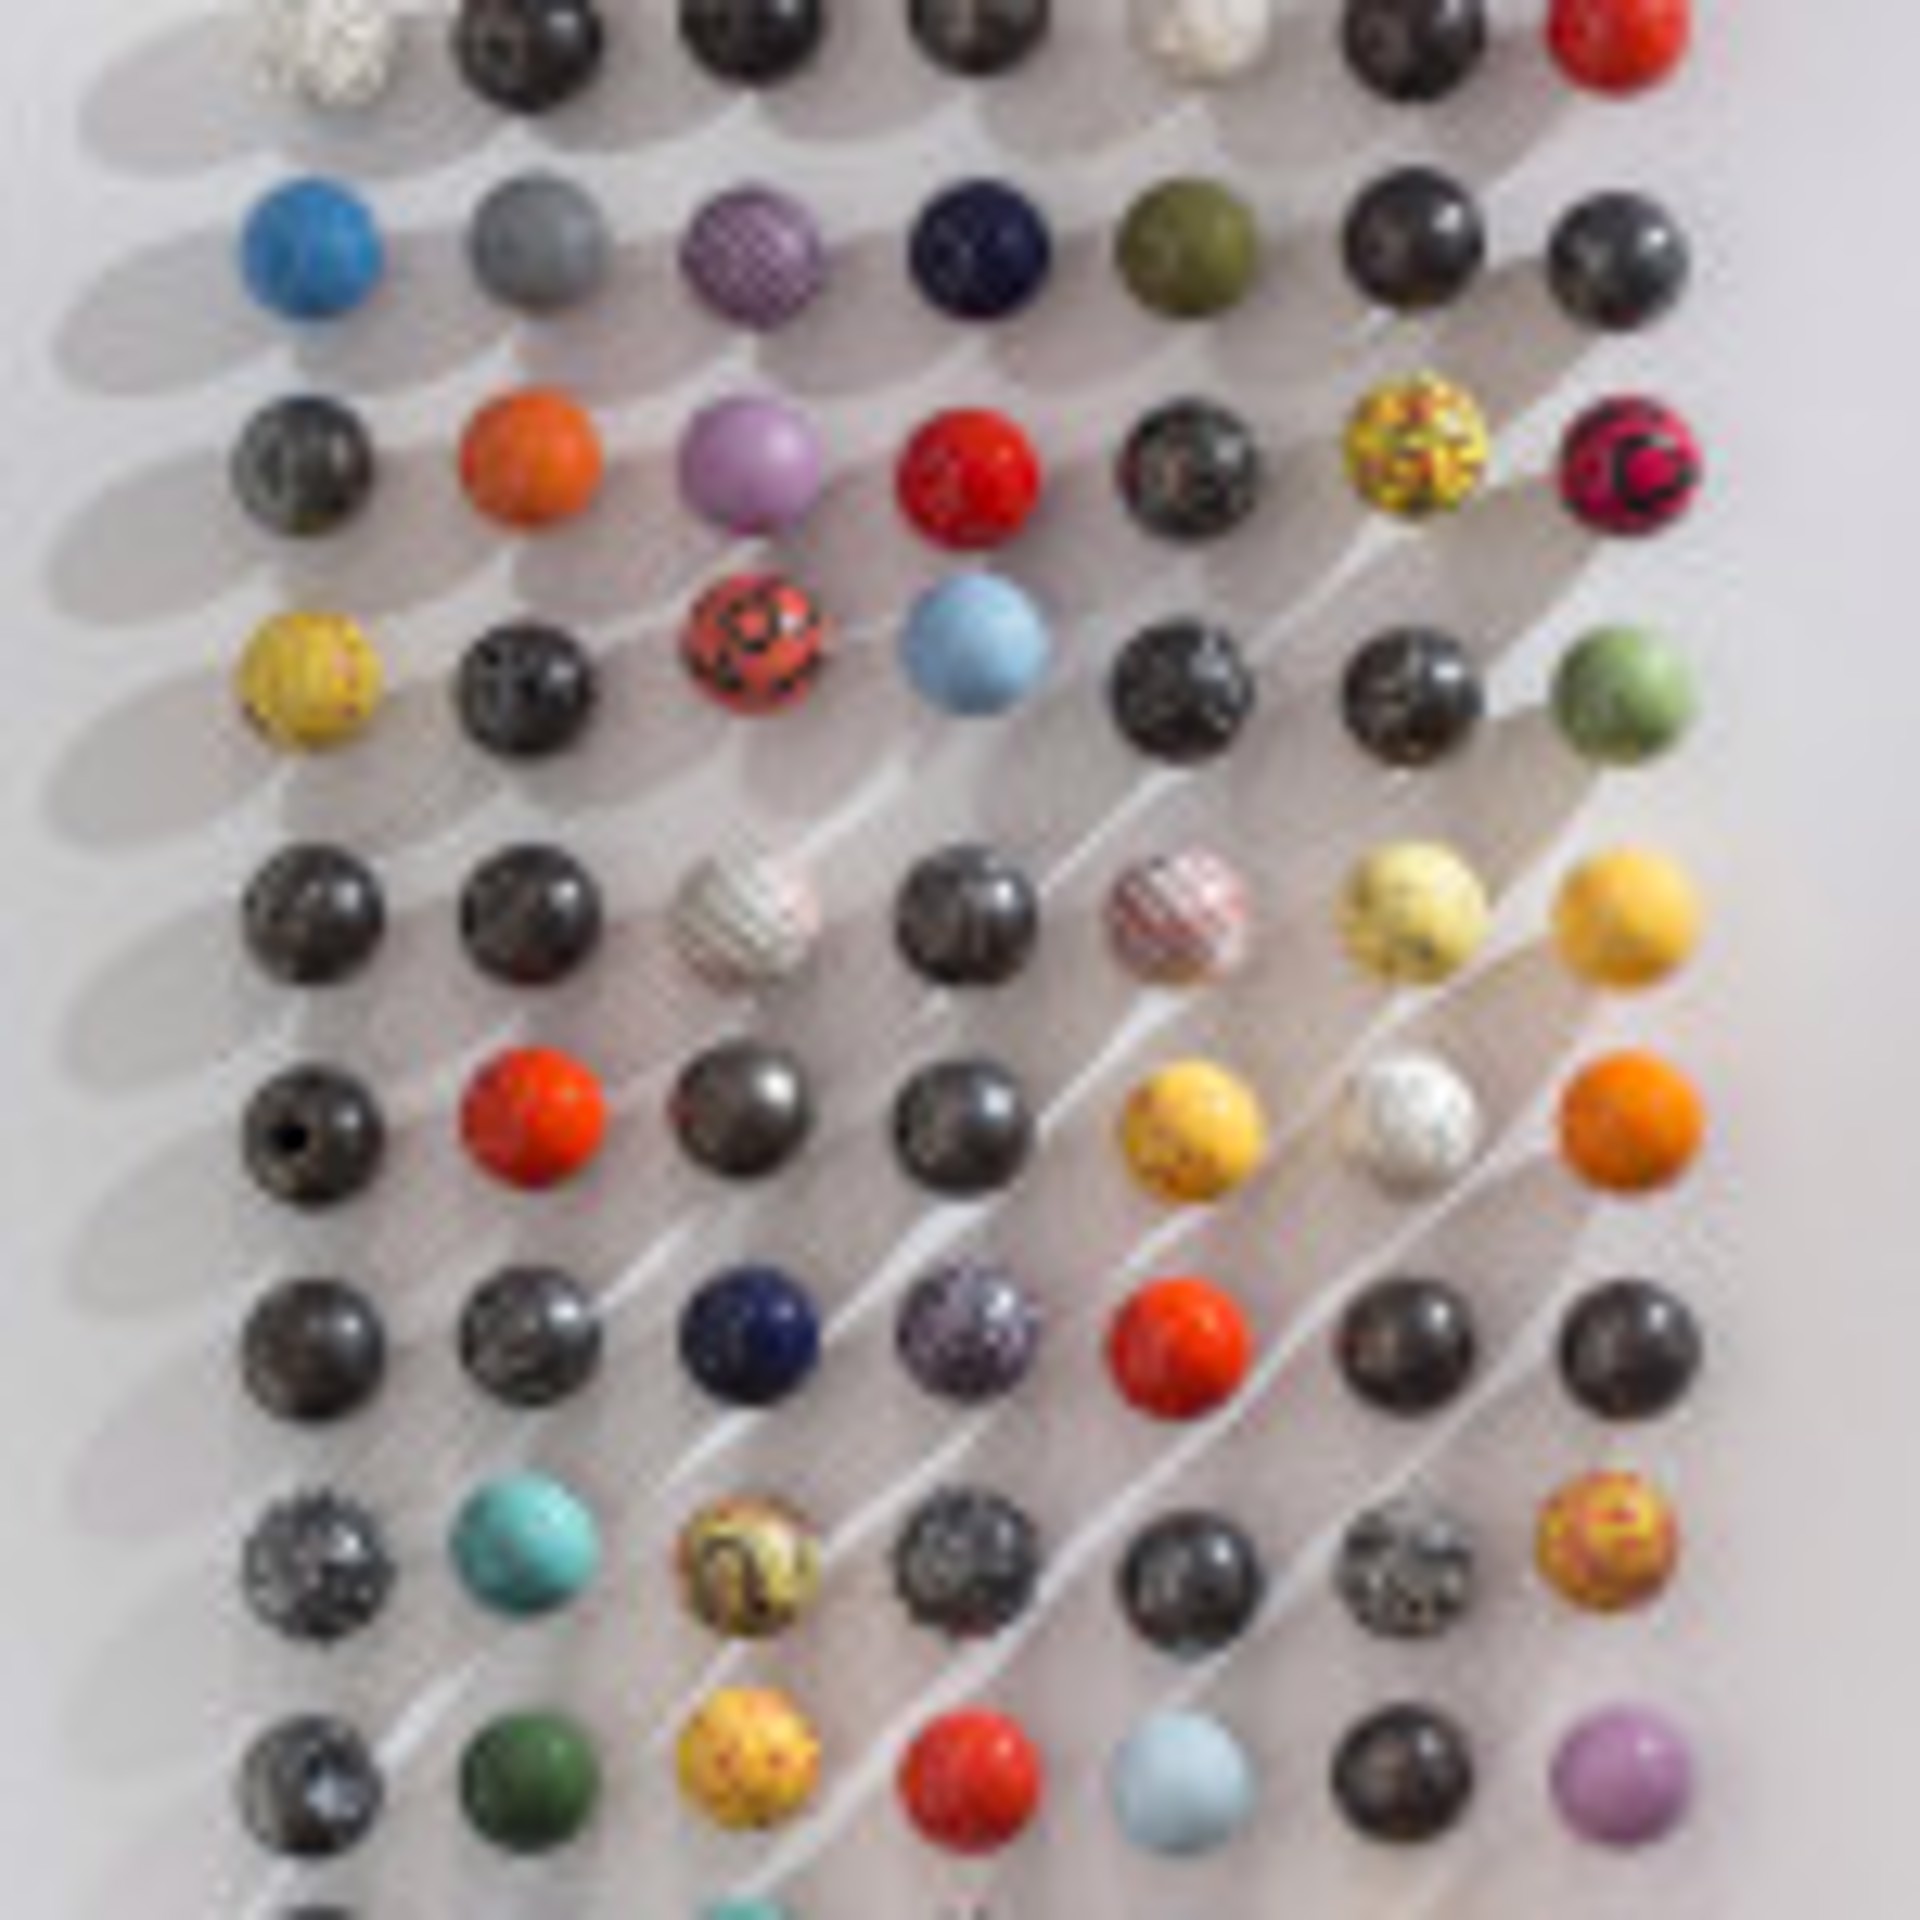 Large Balls by Kaiser Suidan